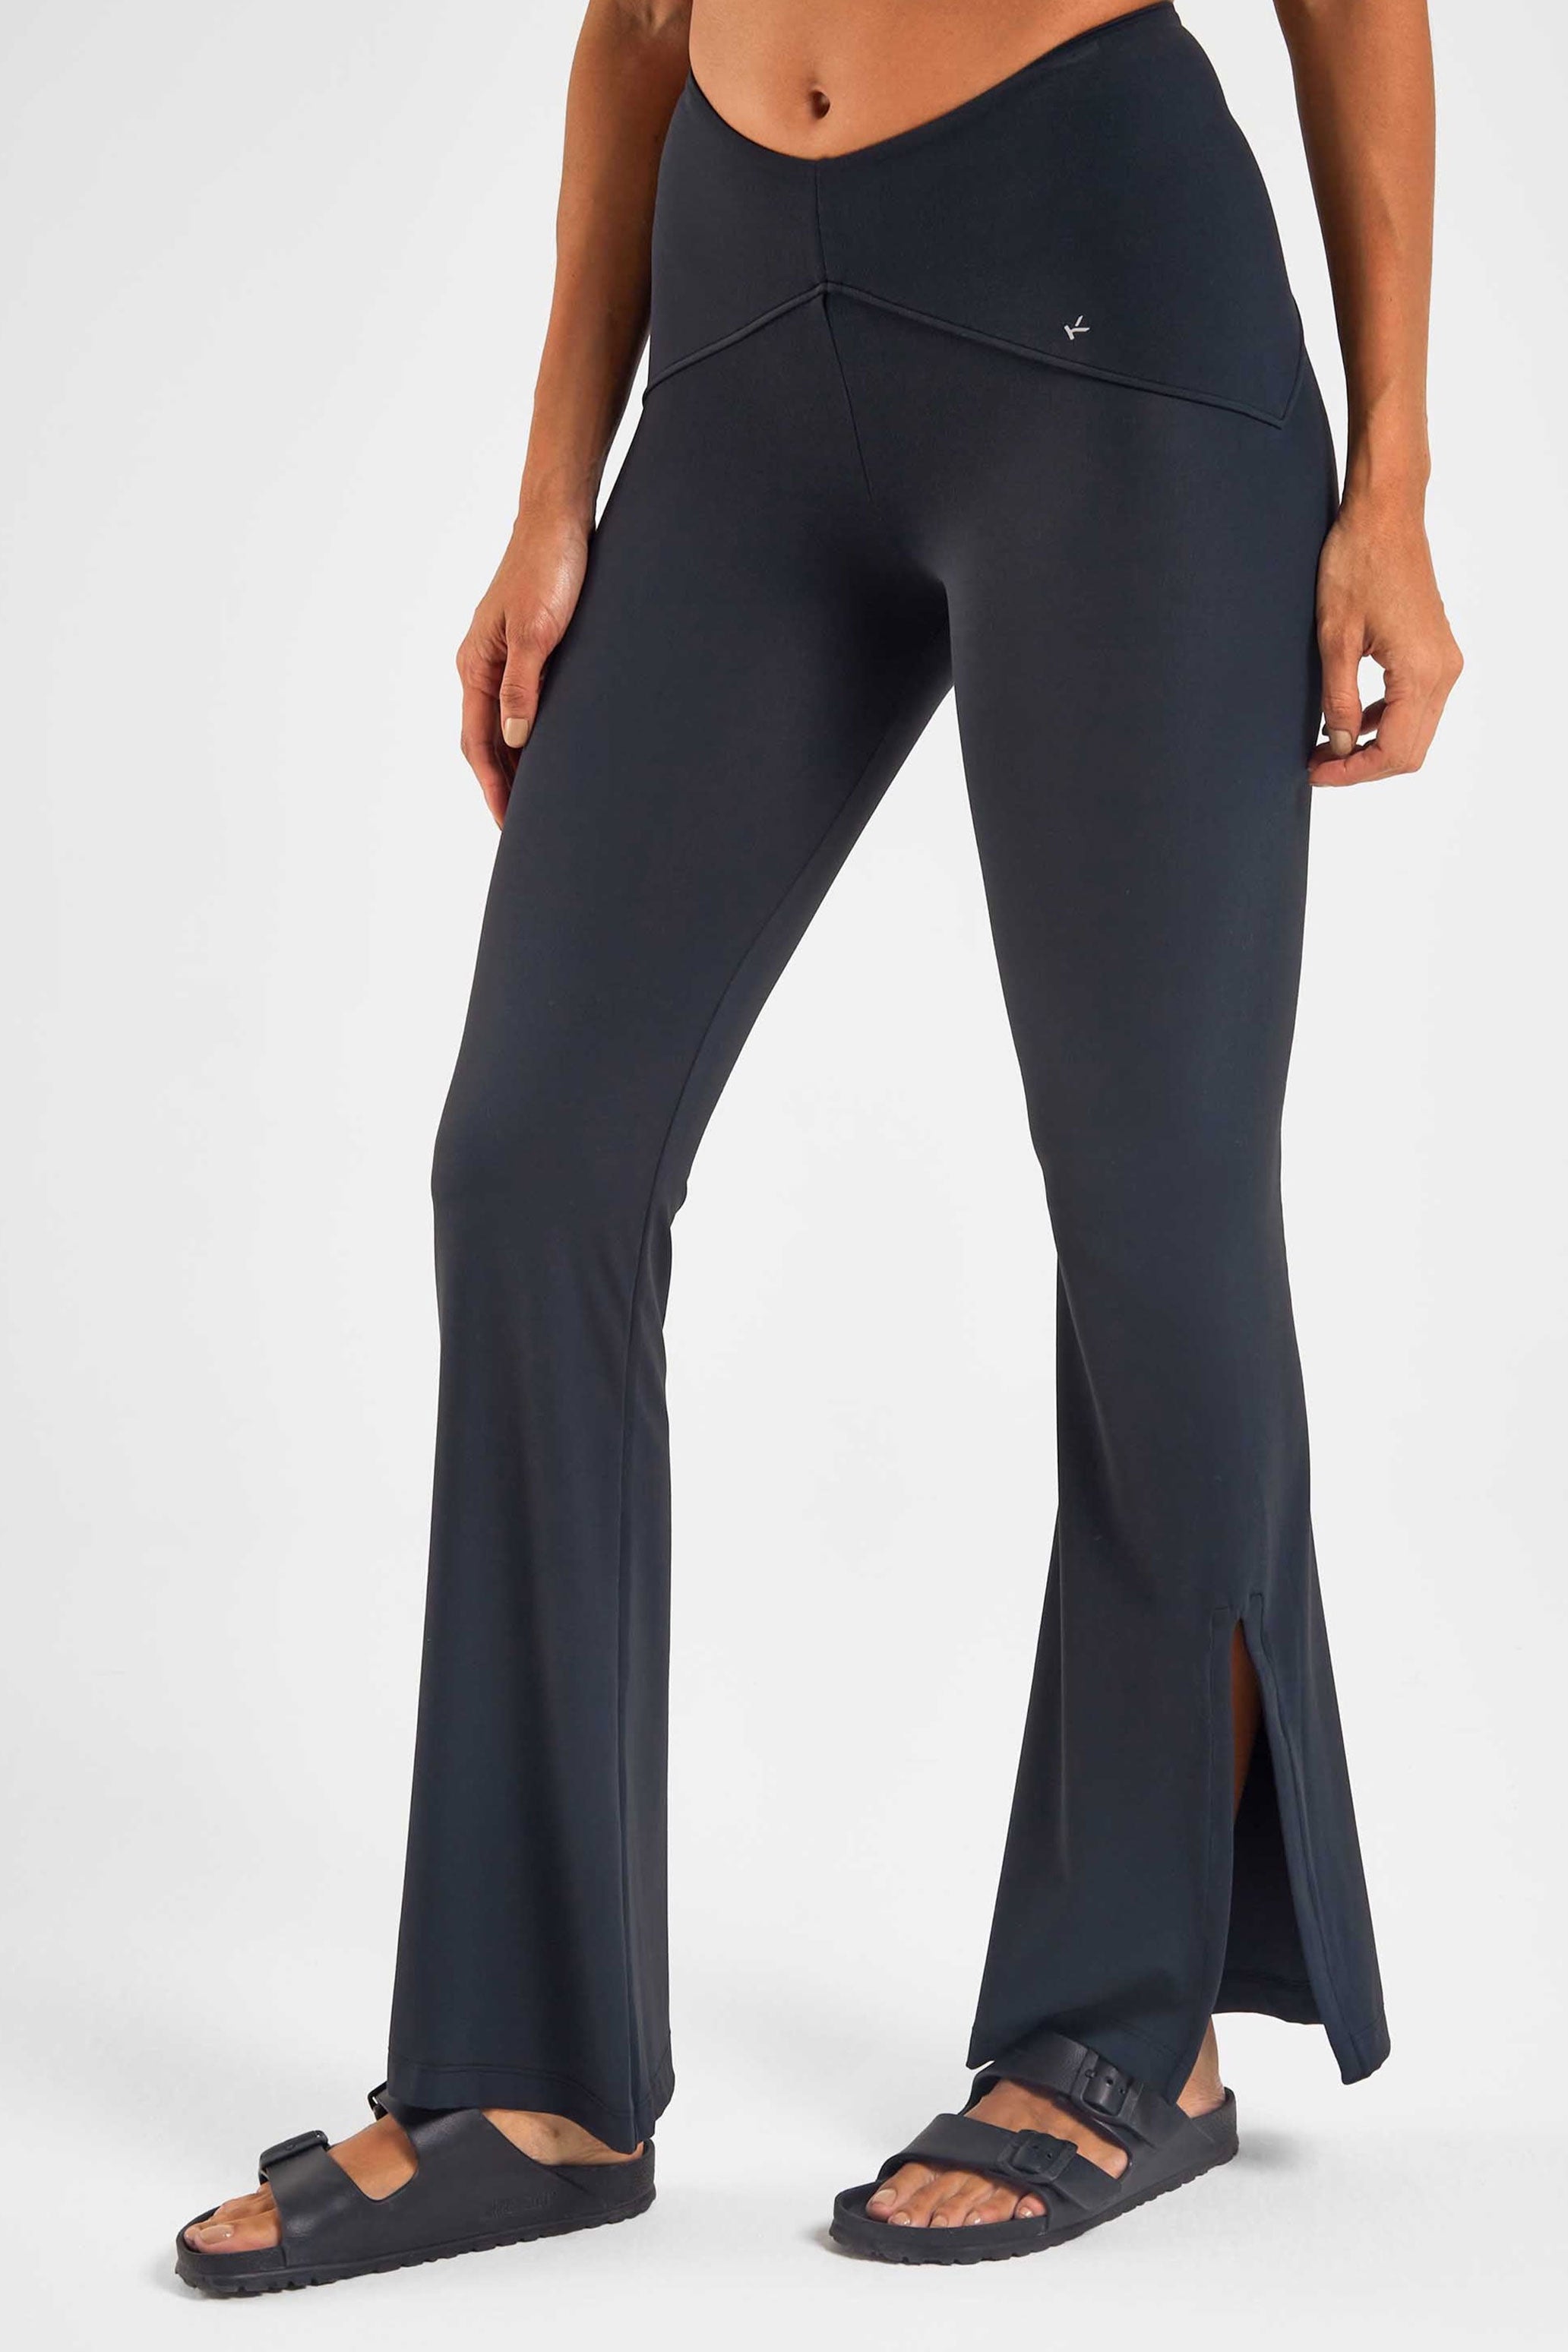 V VOCNI Women's Pants Stretch Slim Fit Pull On Style Dress Pants, Black, L  price in UAE,  UAE